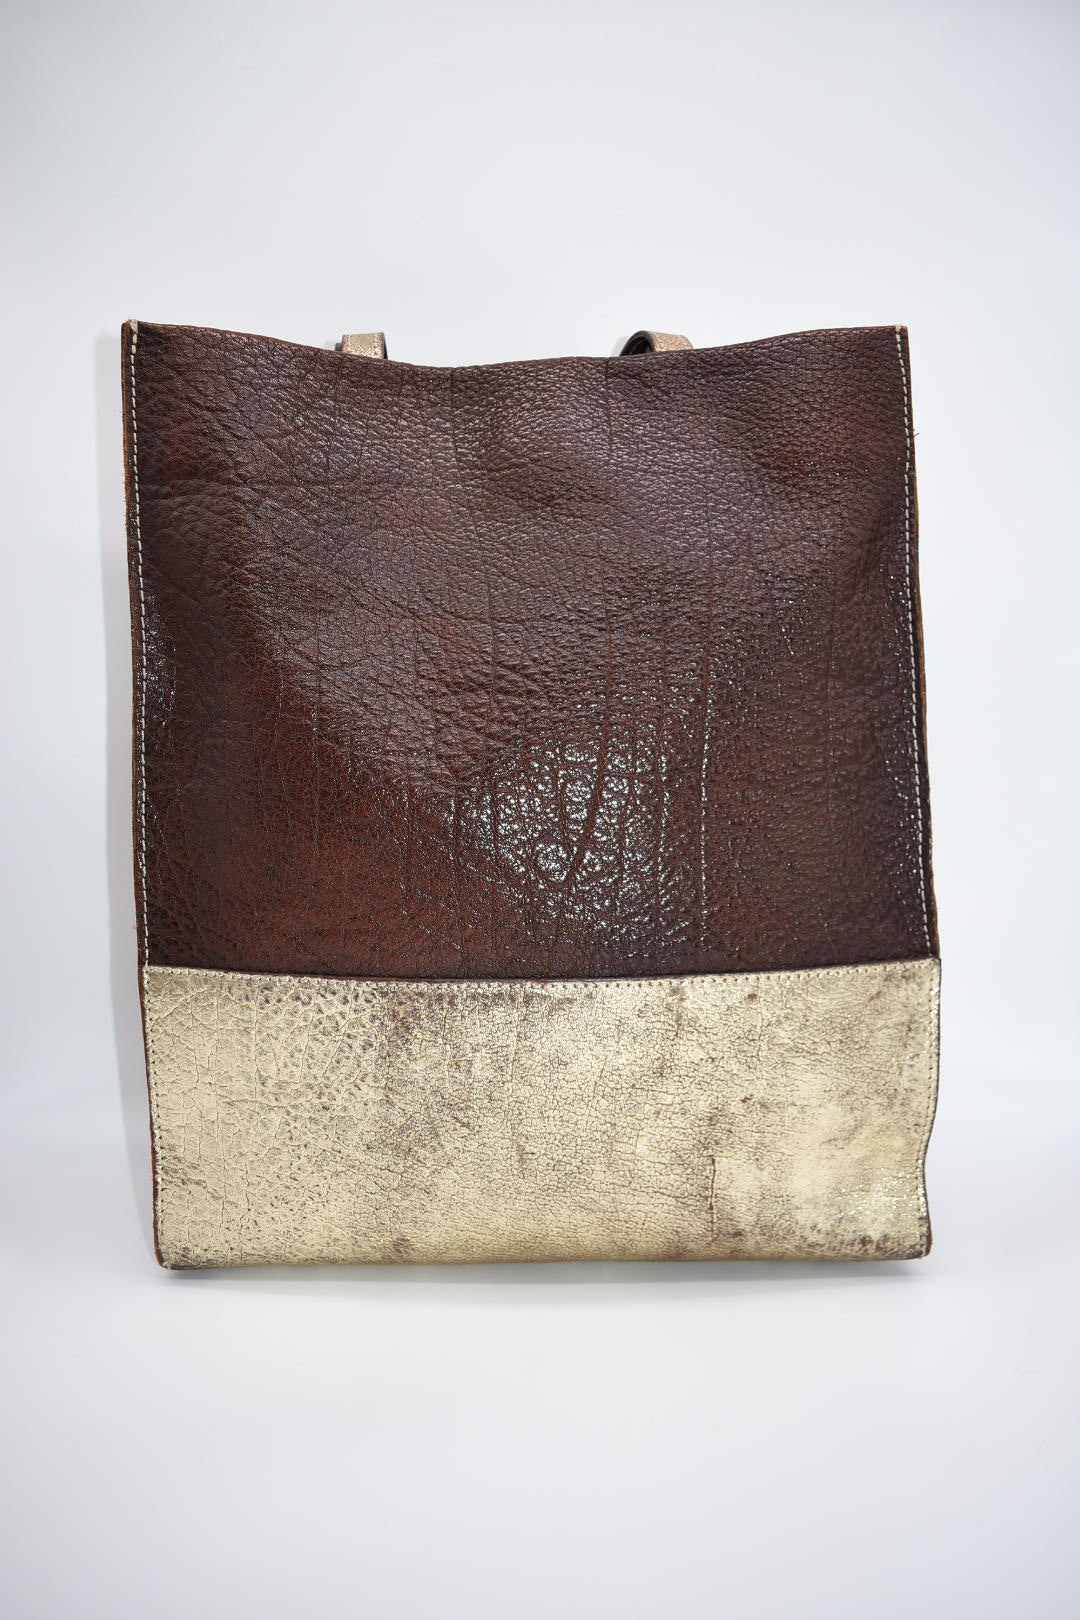 Patricia Nash Leather Shoulder Tote Bag in Distressed Bronze & Bronze